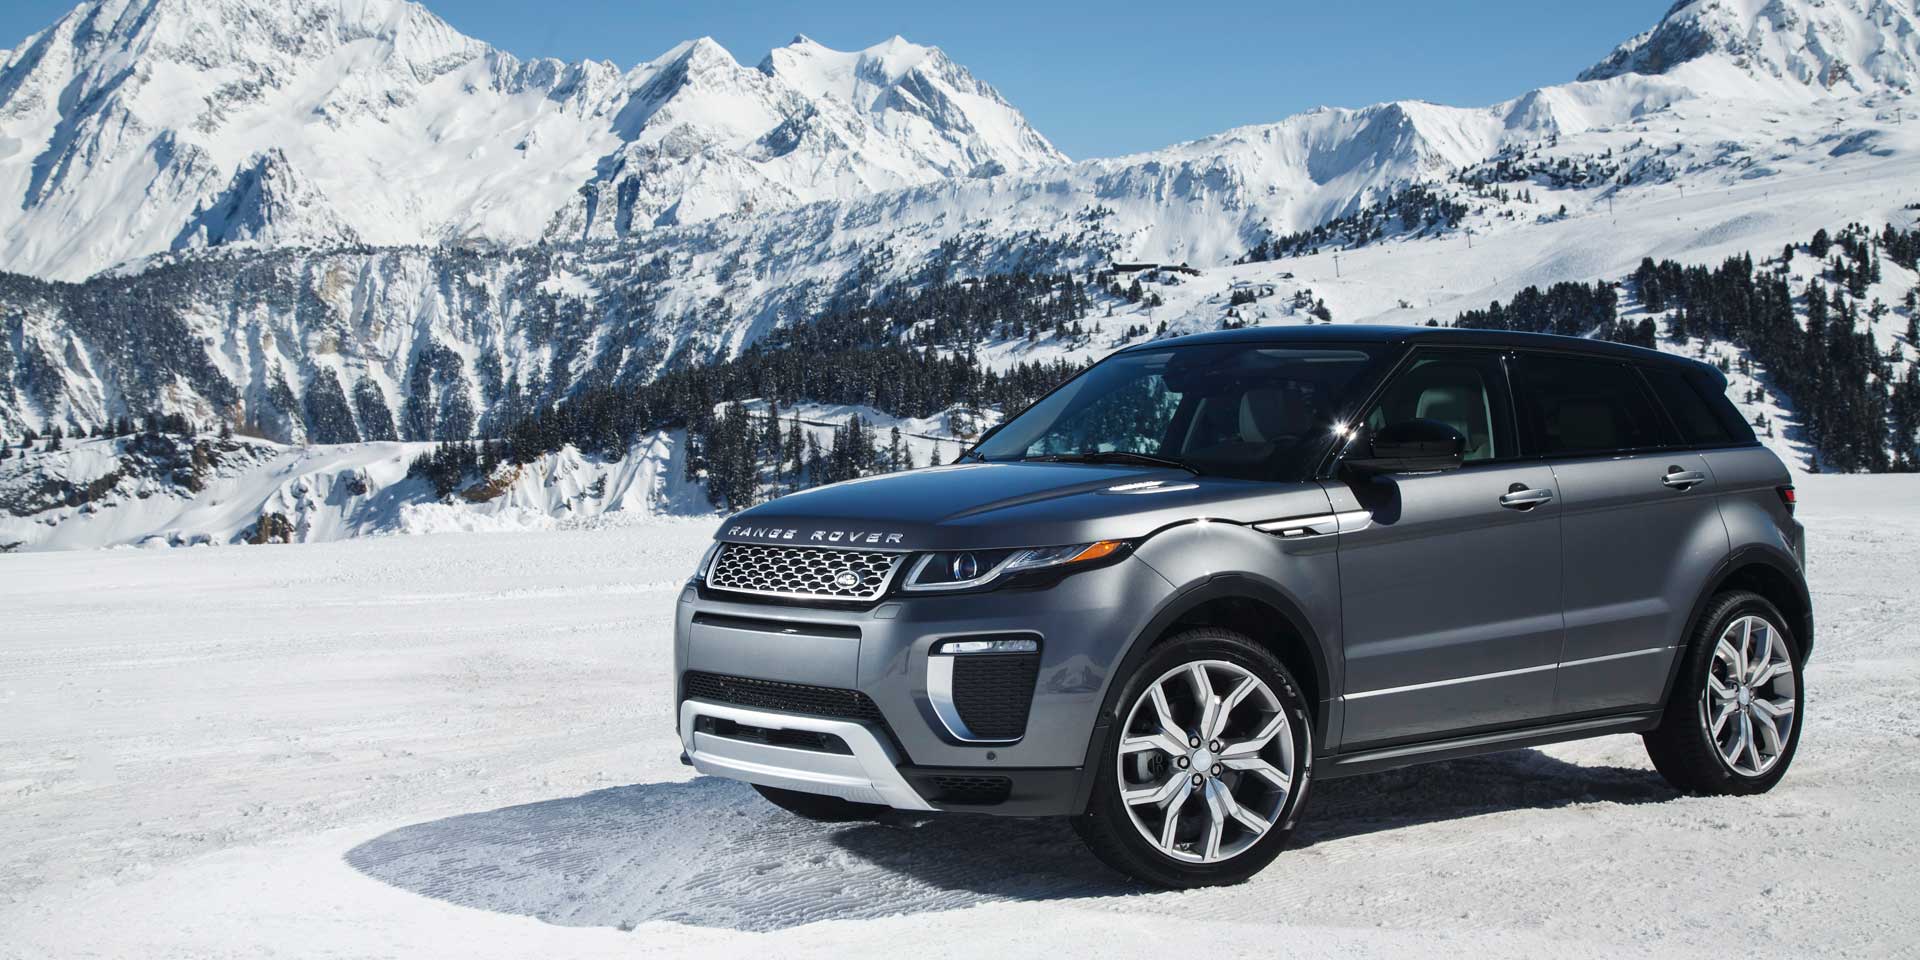 2017 Land Rover Range Rover Evoque Vehicles On Display Chicago